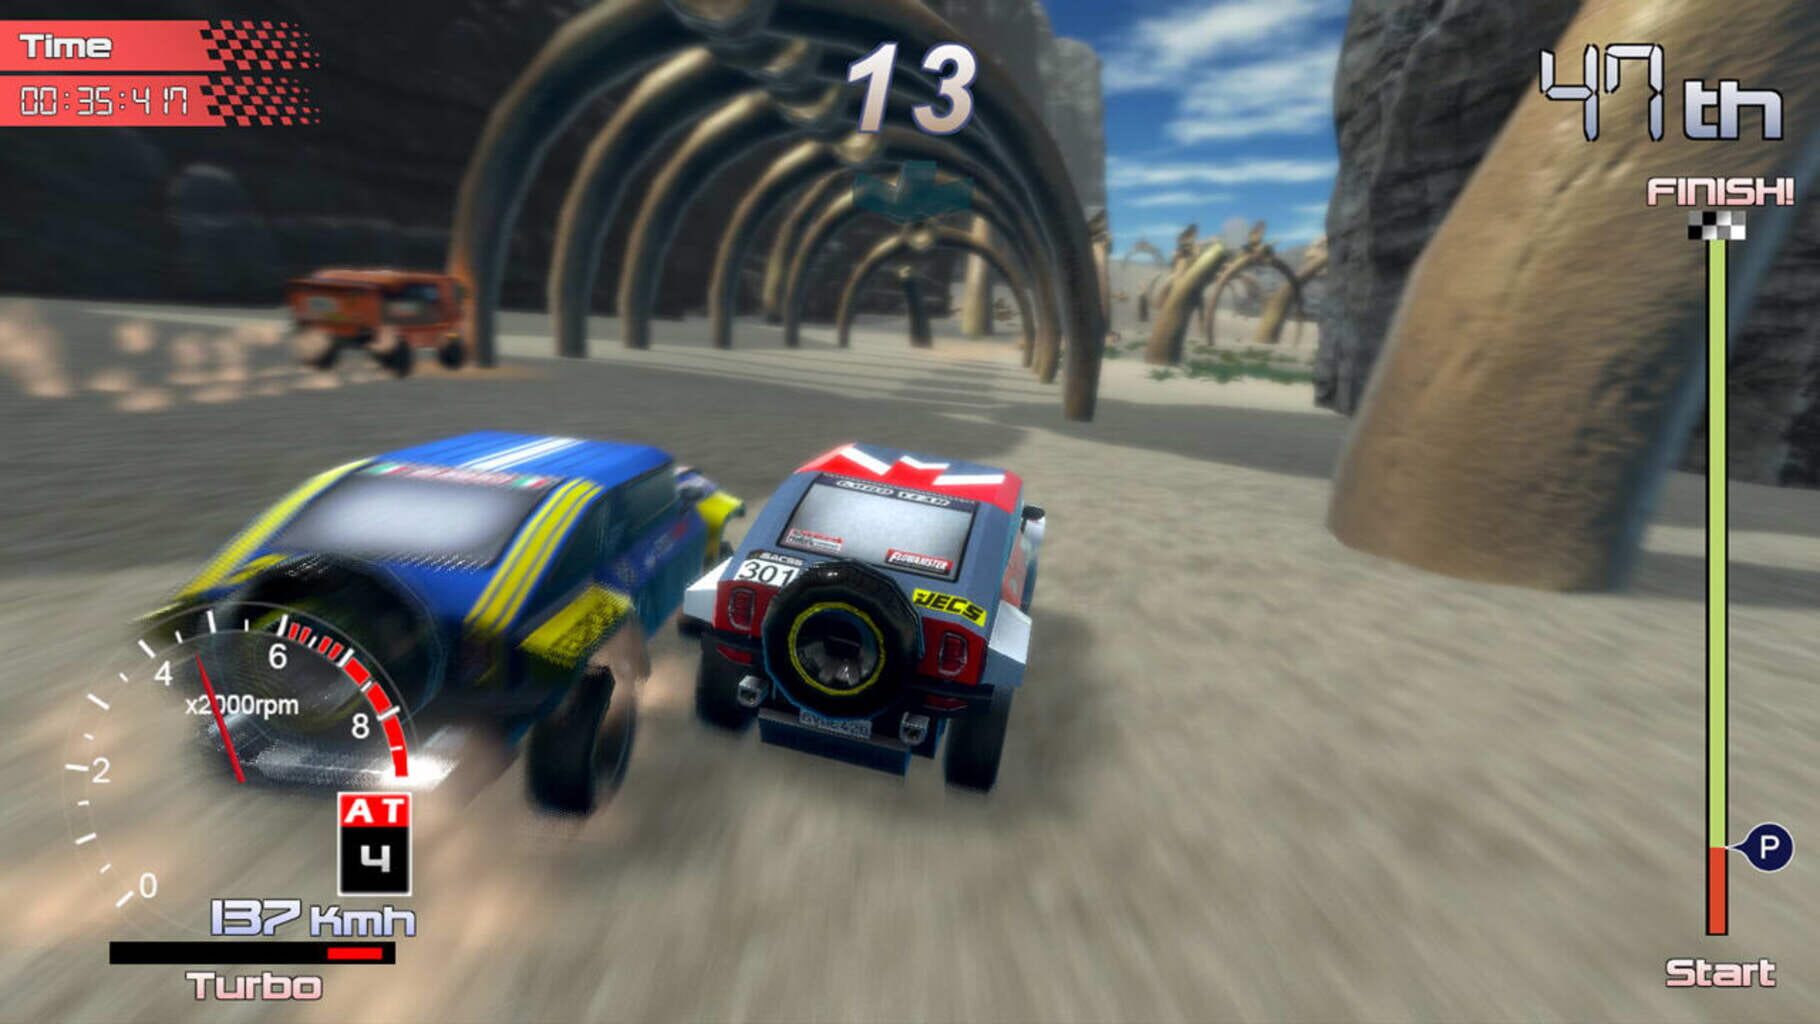 Captura de pantalla - WildTrax Racing